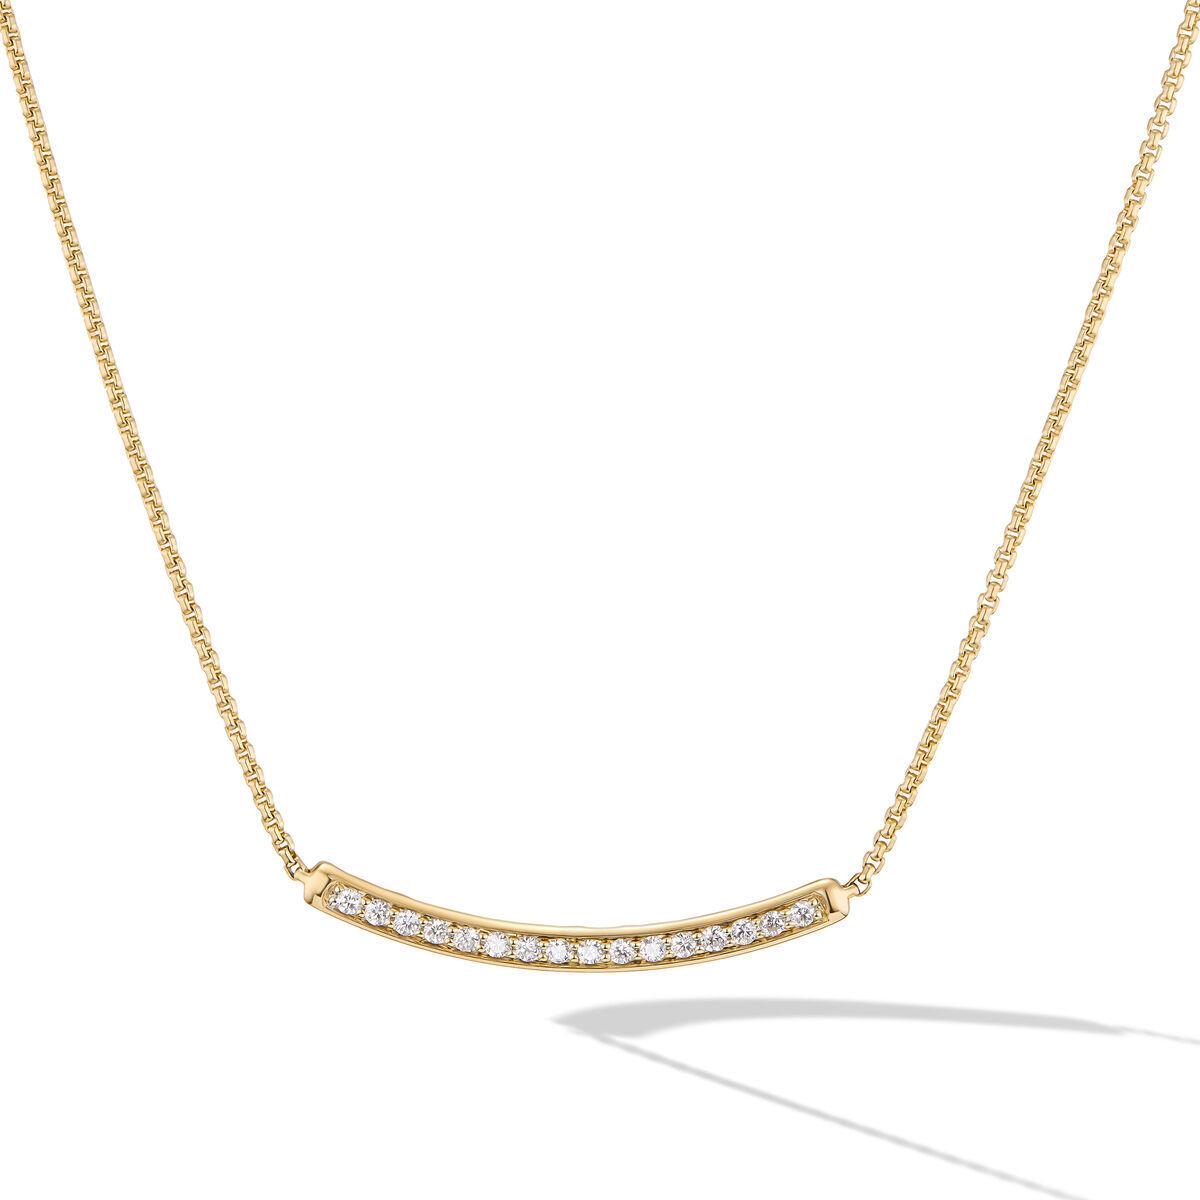 David Yurman Petite Pavé Bar Necklace in 18K Yellow Gold with Diamonds